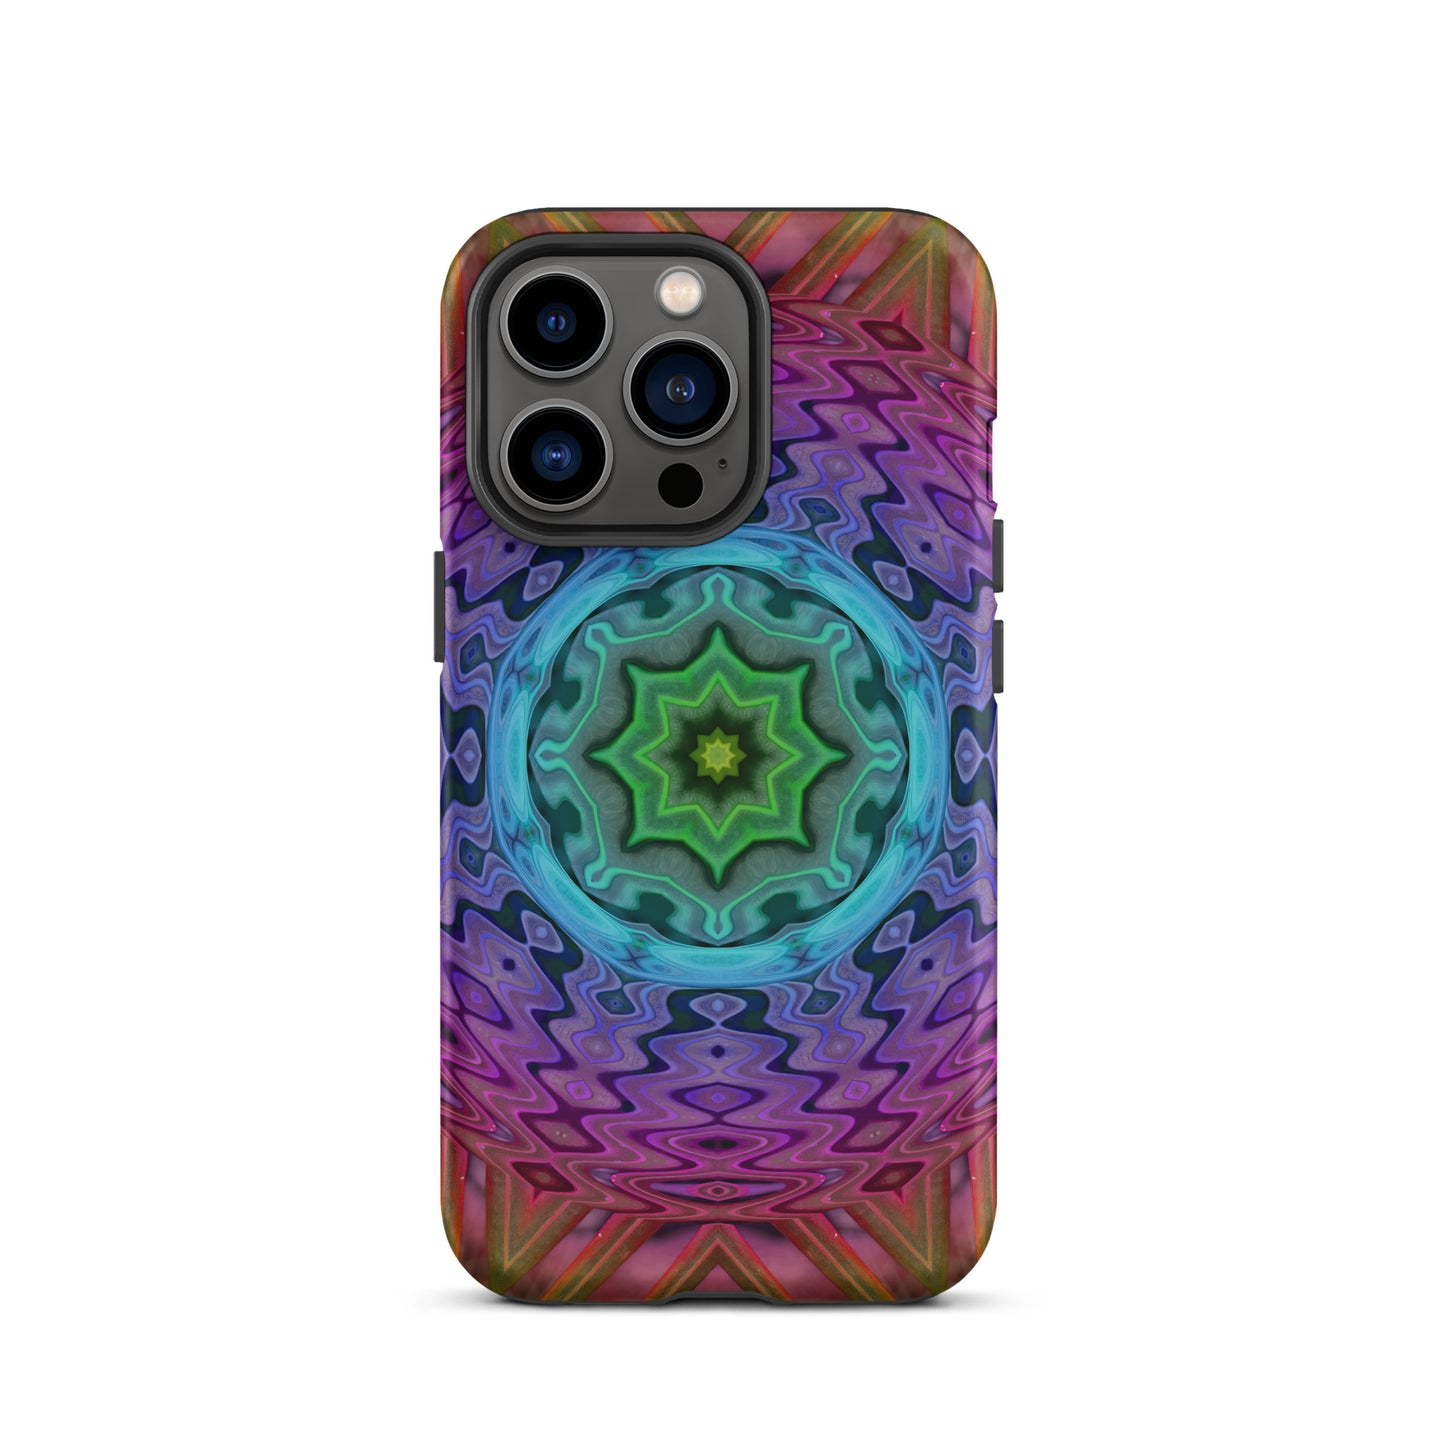 "Rainbow Abode" iCanvas Tough iPhone case